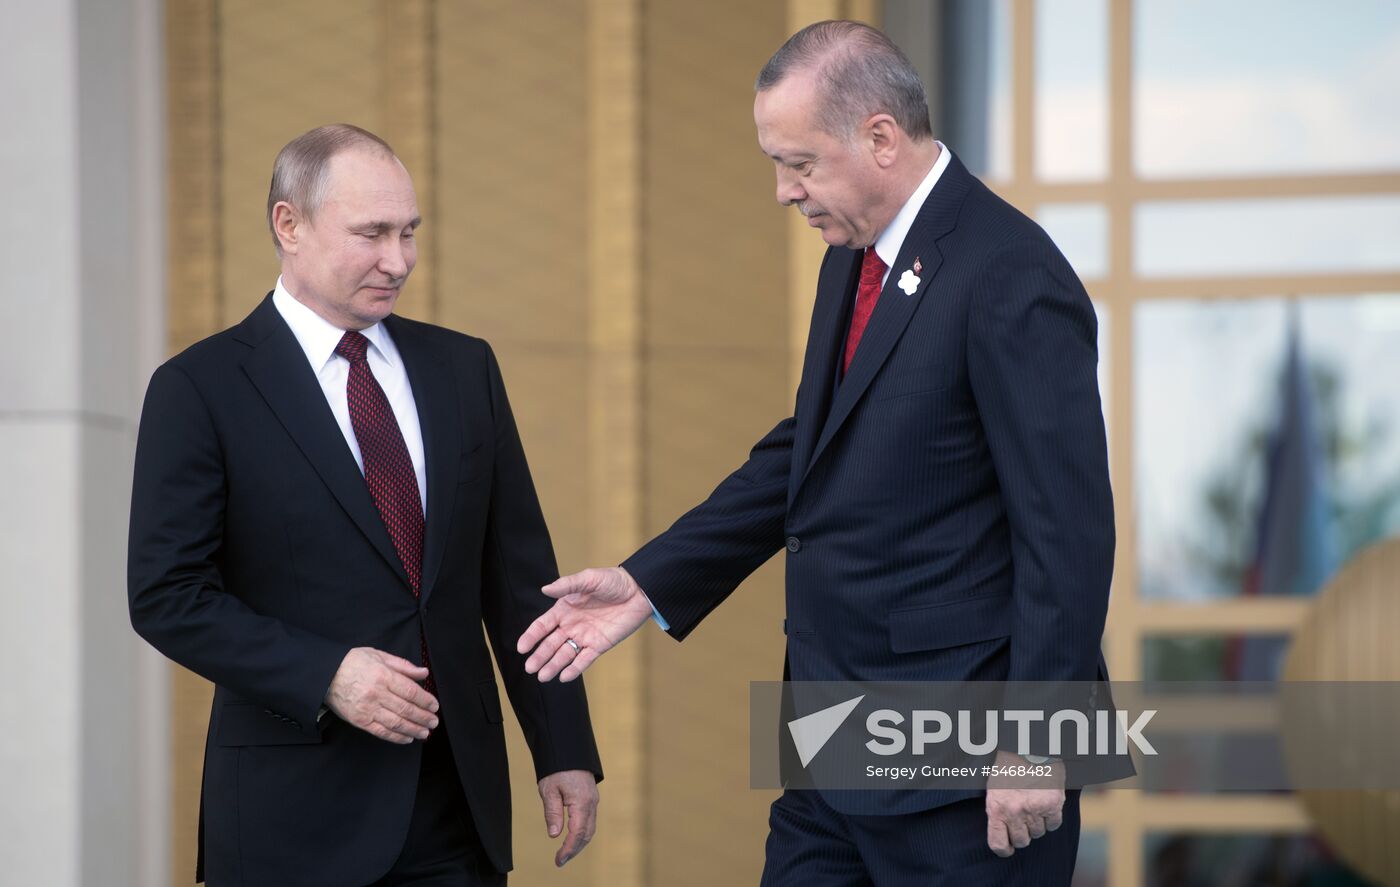 President Vladimir Putin's visit to Turkey